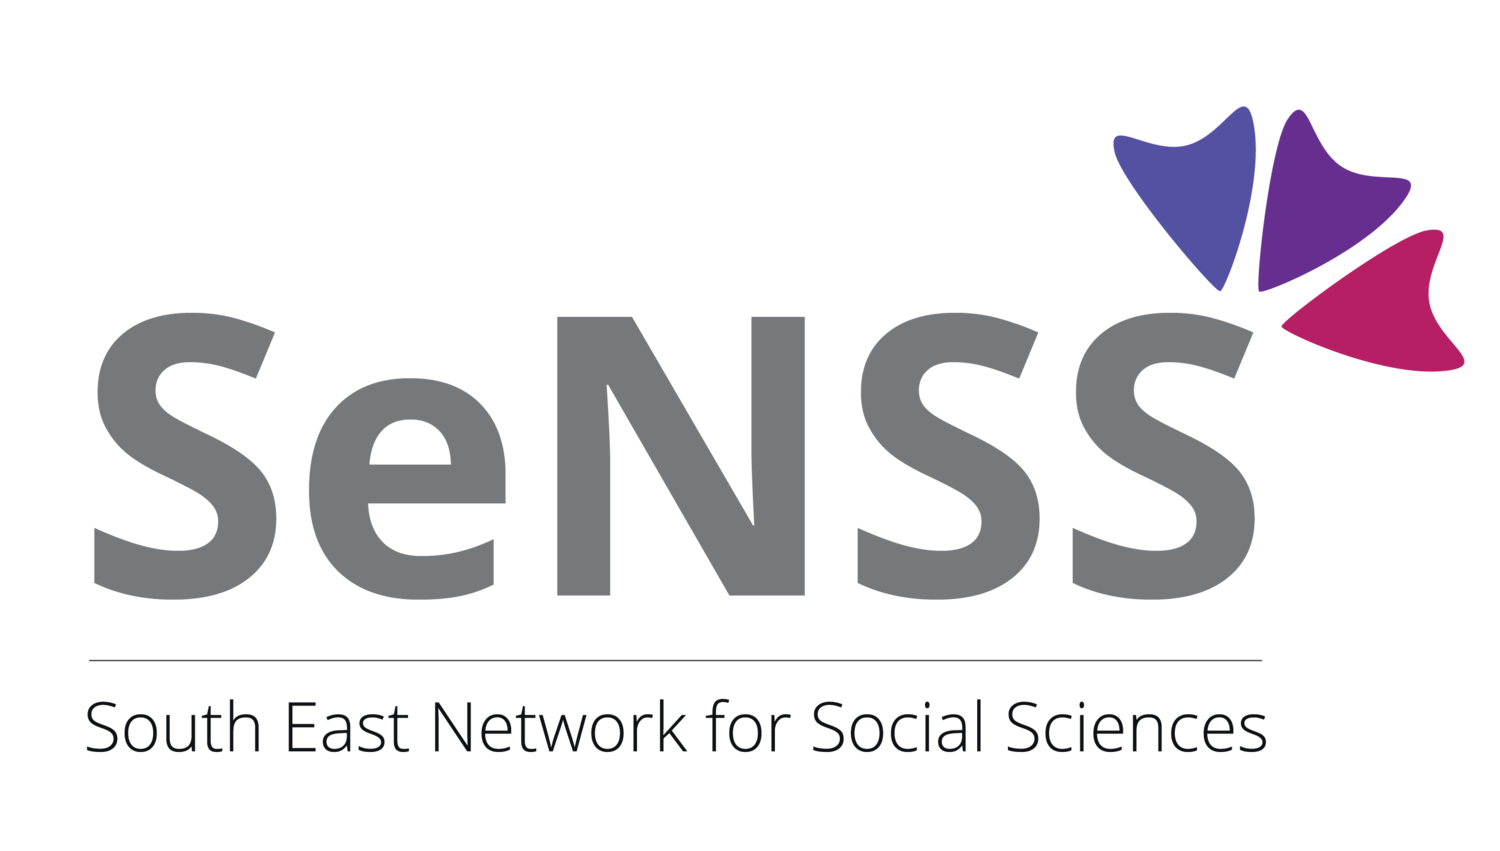 SeNSS Doctoral Training Partnership